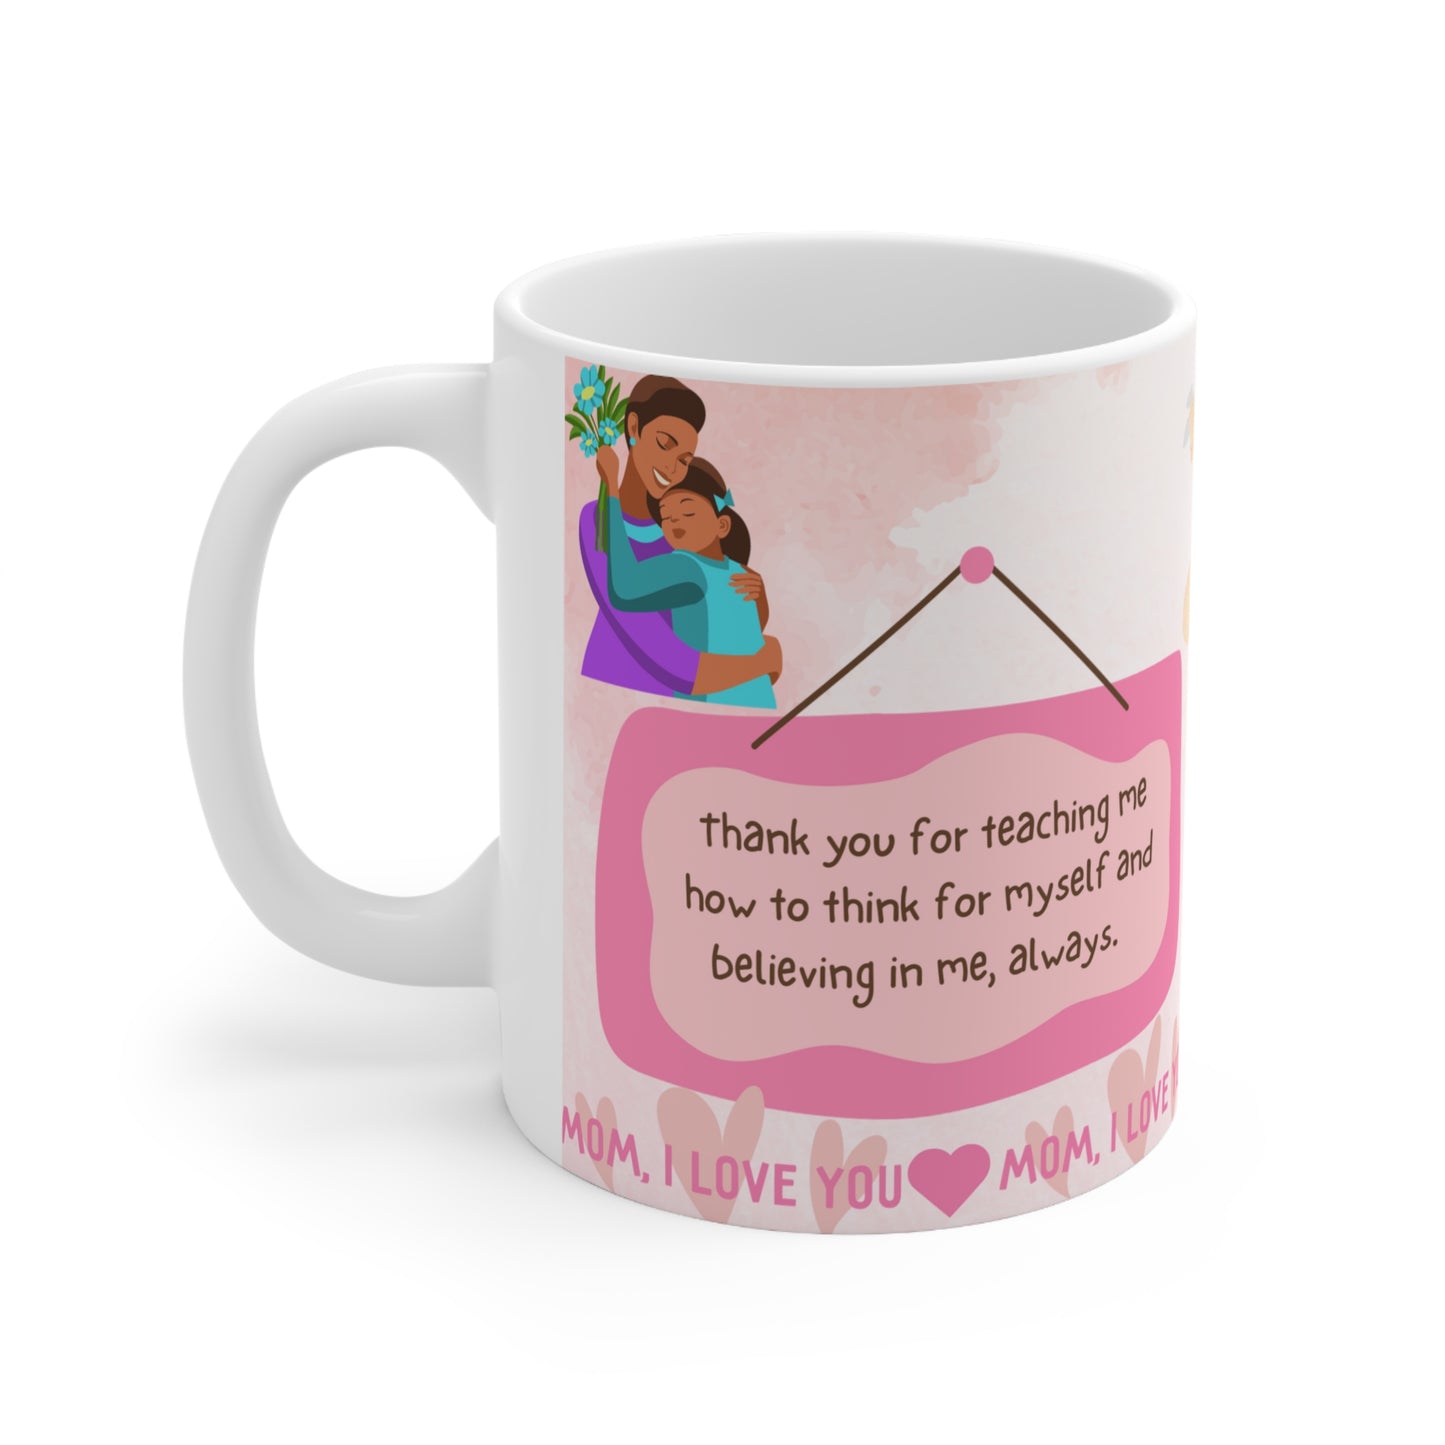 A coffee mug full of gratitude and love for Mom!